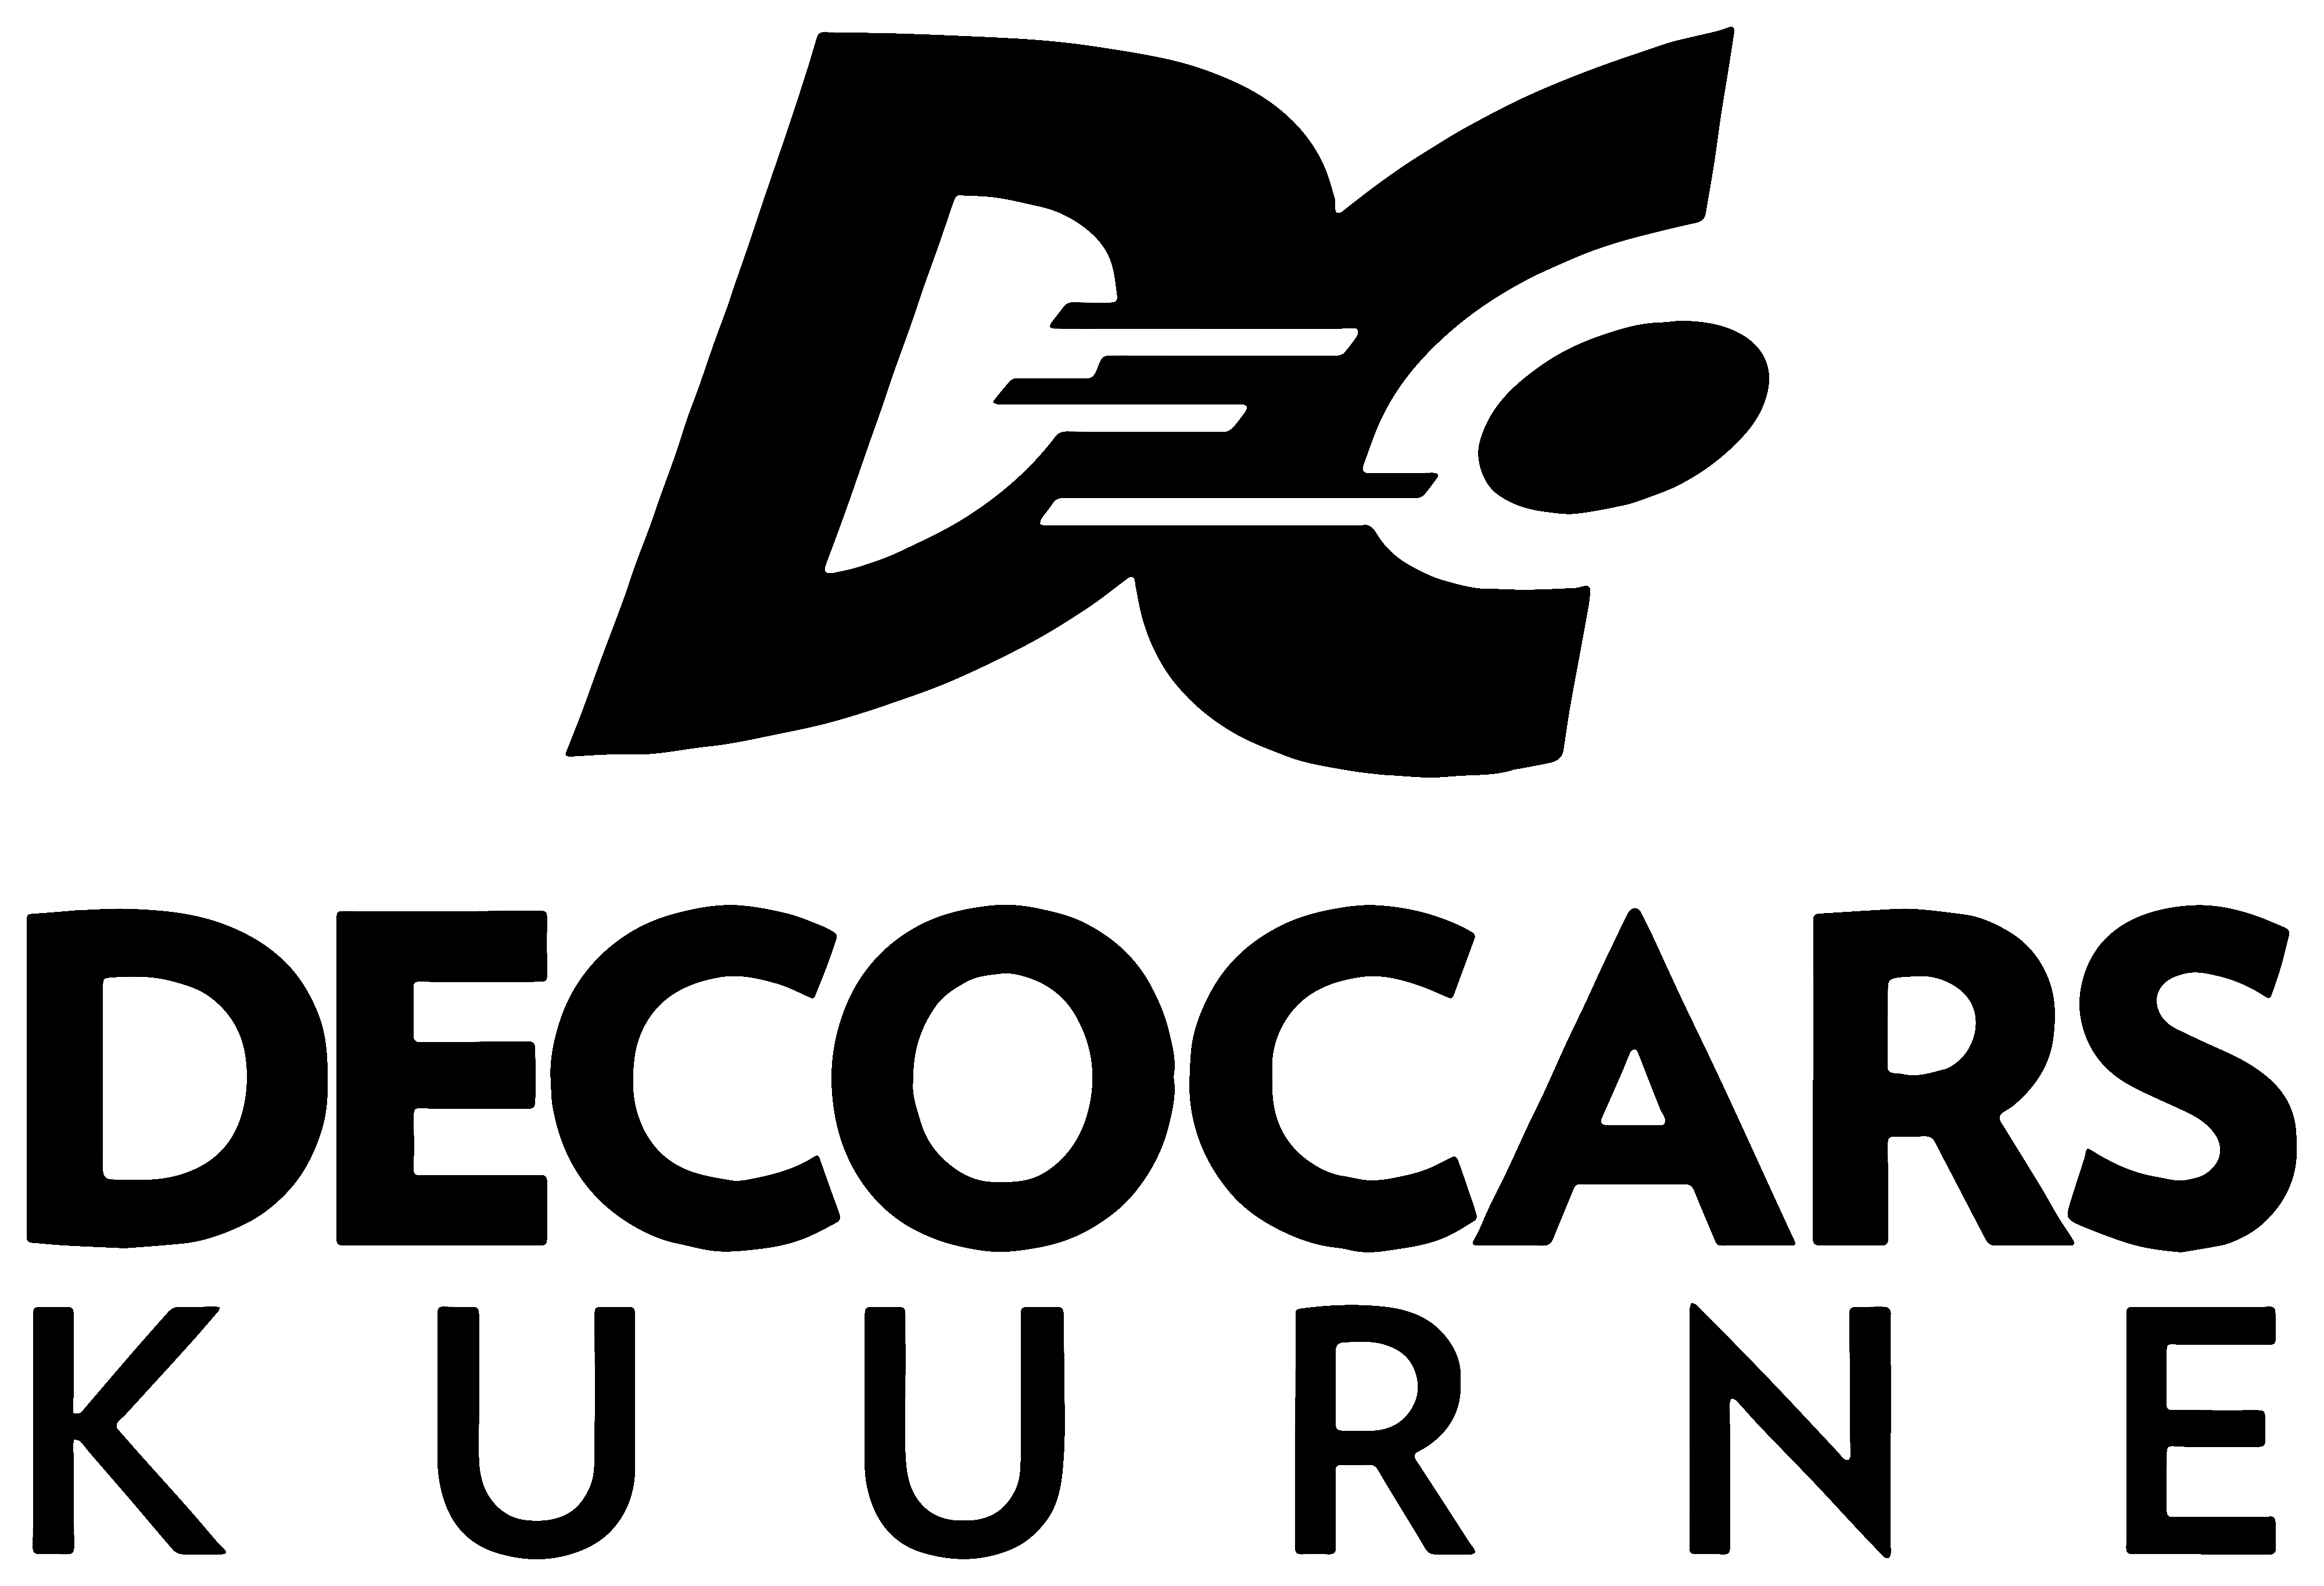 Decocars Kuurne logo